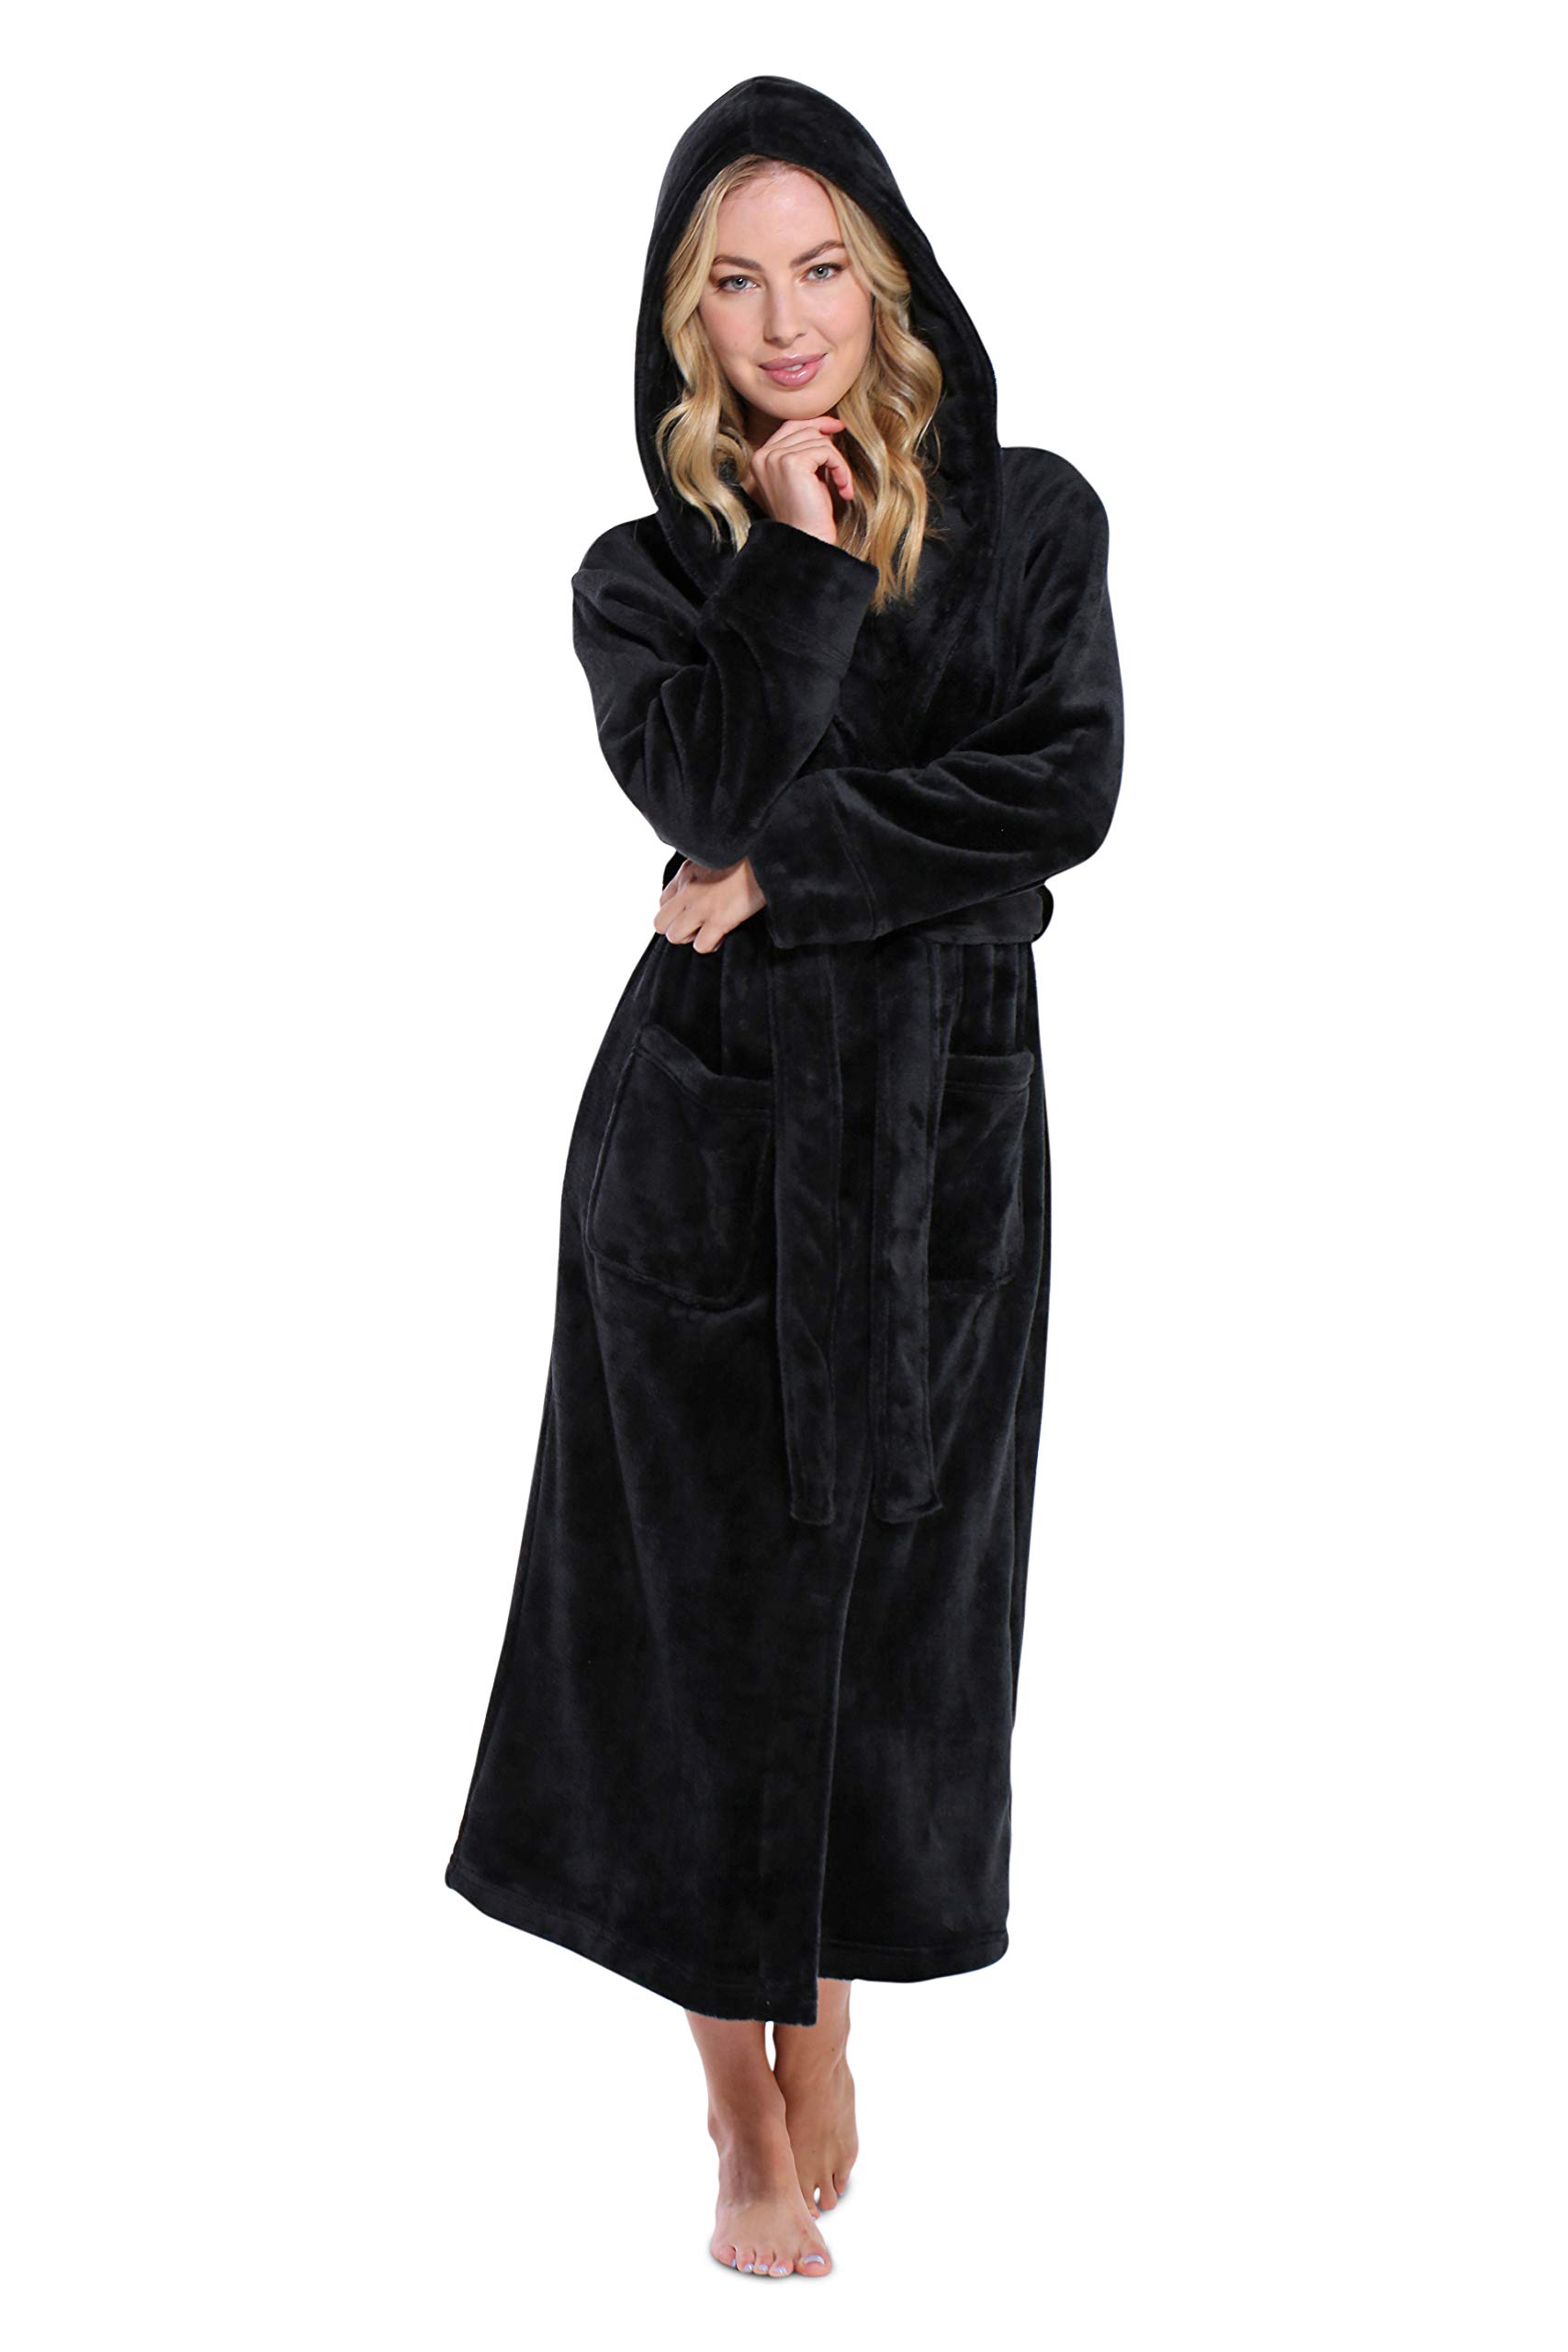 Turquaz Plush Robes For Women, Soft Warm Fleece Bathrobe for Women, Long comfy Womens Robe